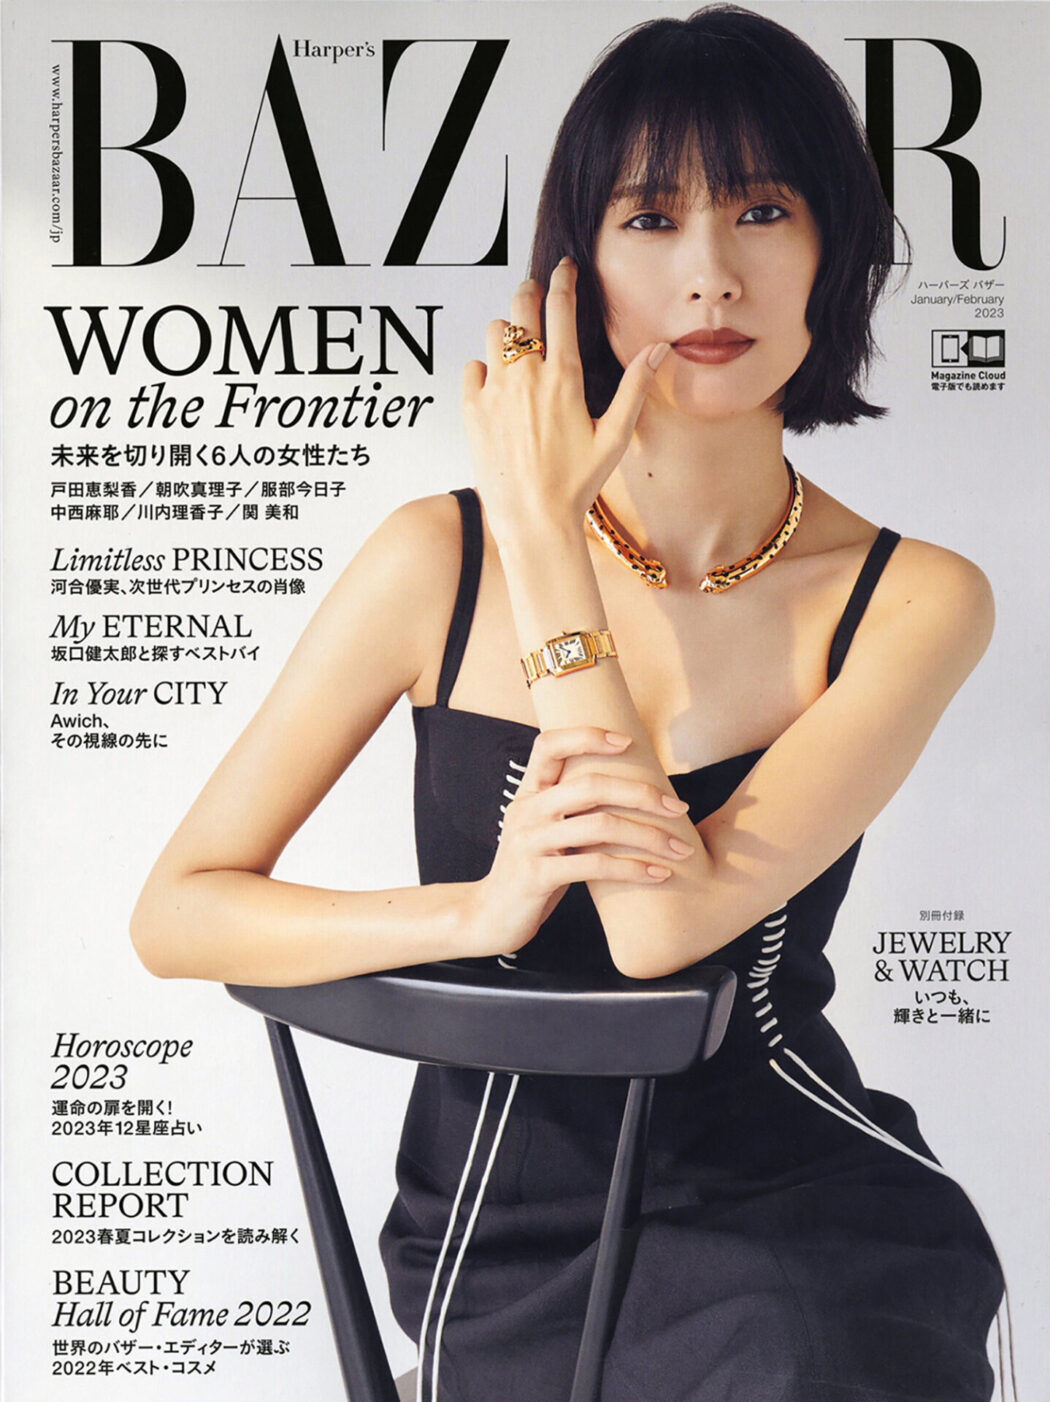 Styled by Yoko Kageyama
Harper's BAZAAR January / February issue 2023